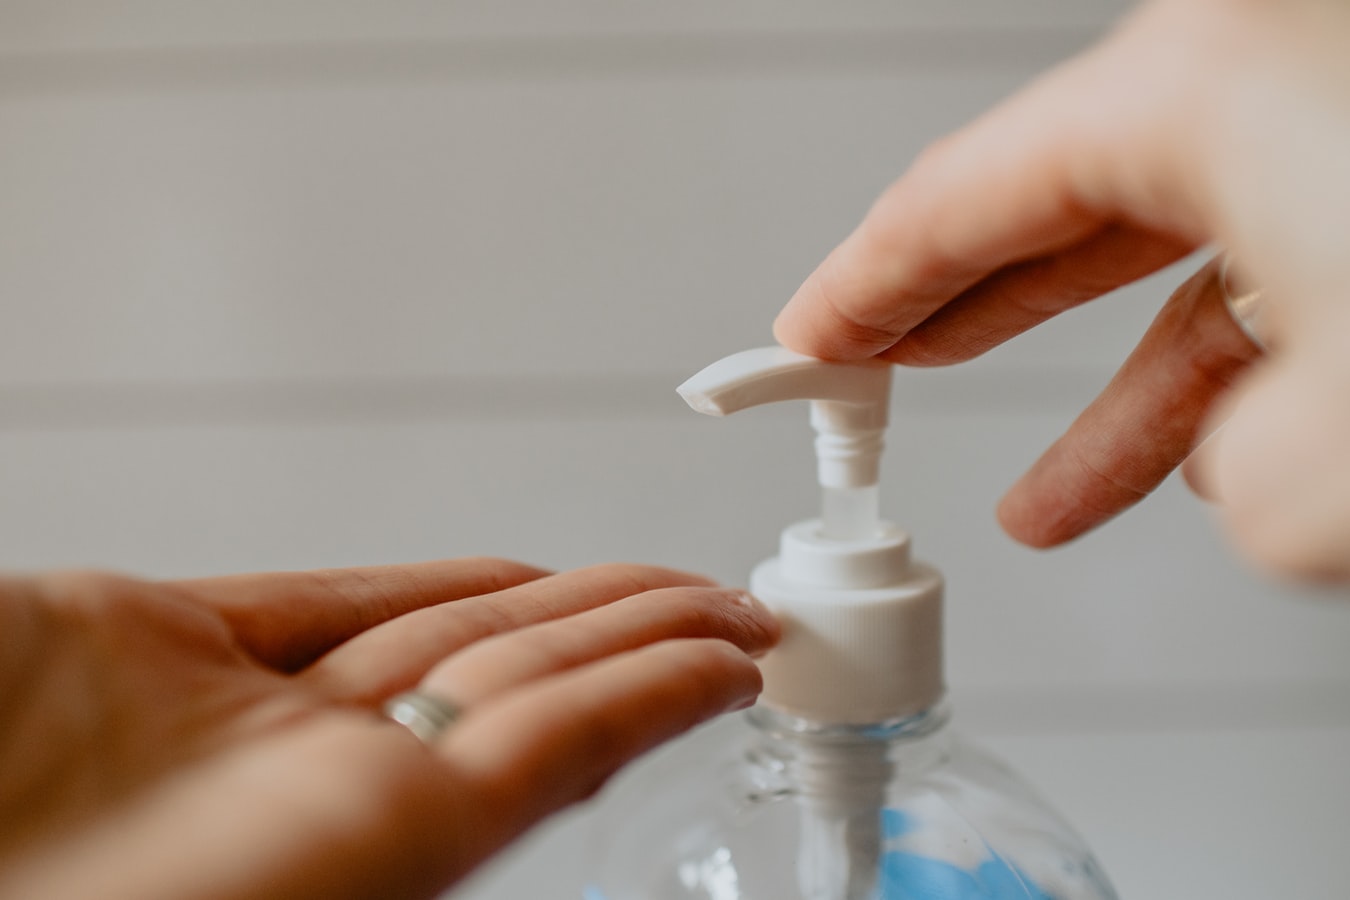 FDA recalls Toxic hand sanitizer